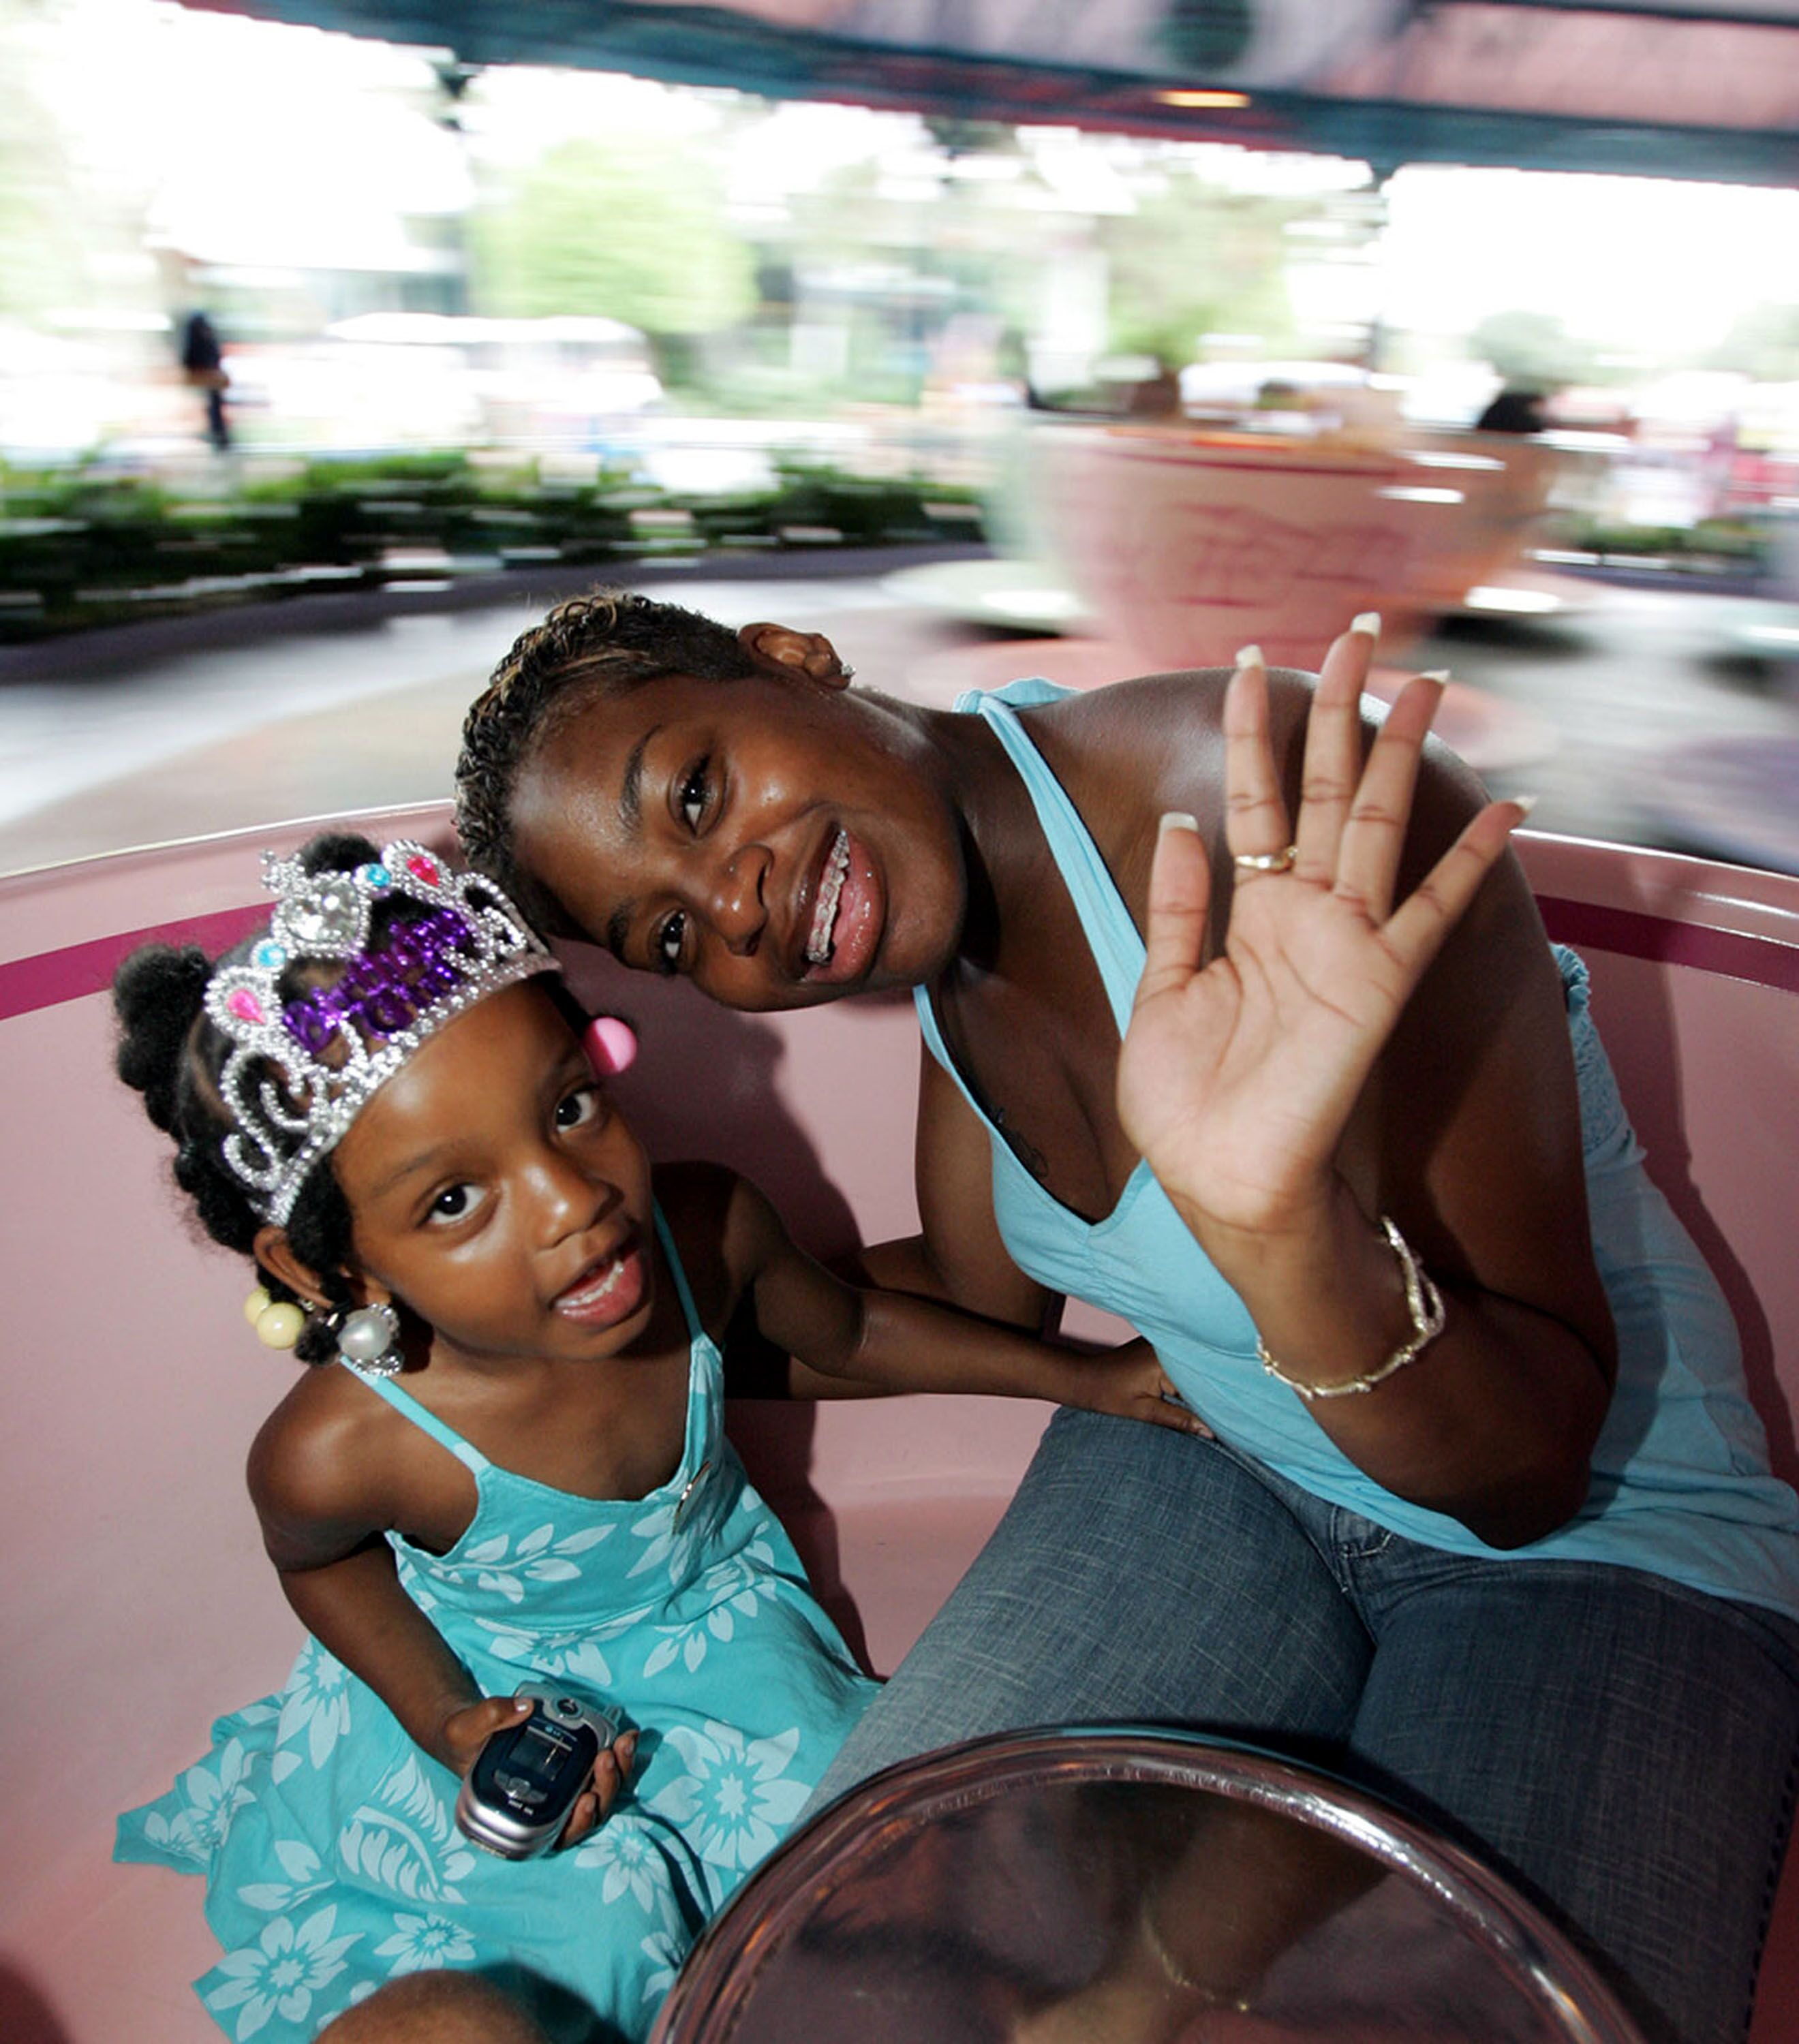 Fantasia in Disneyland with her daughter | Source: Getty Images/GlobalImagesUkraine